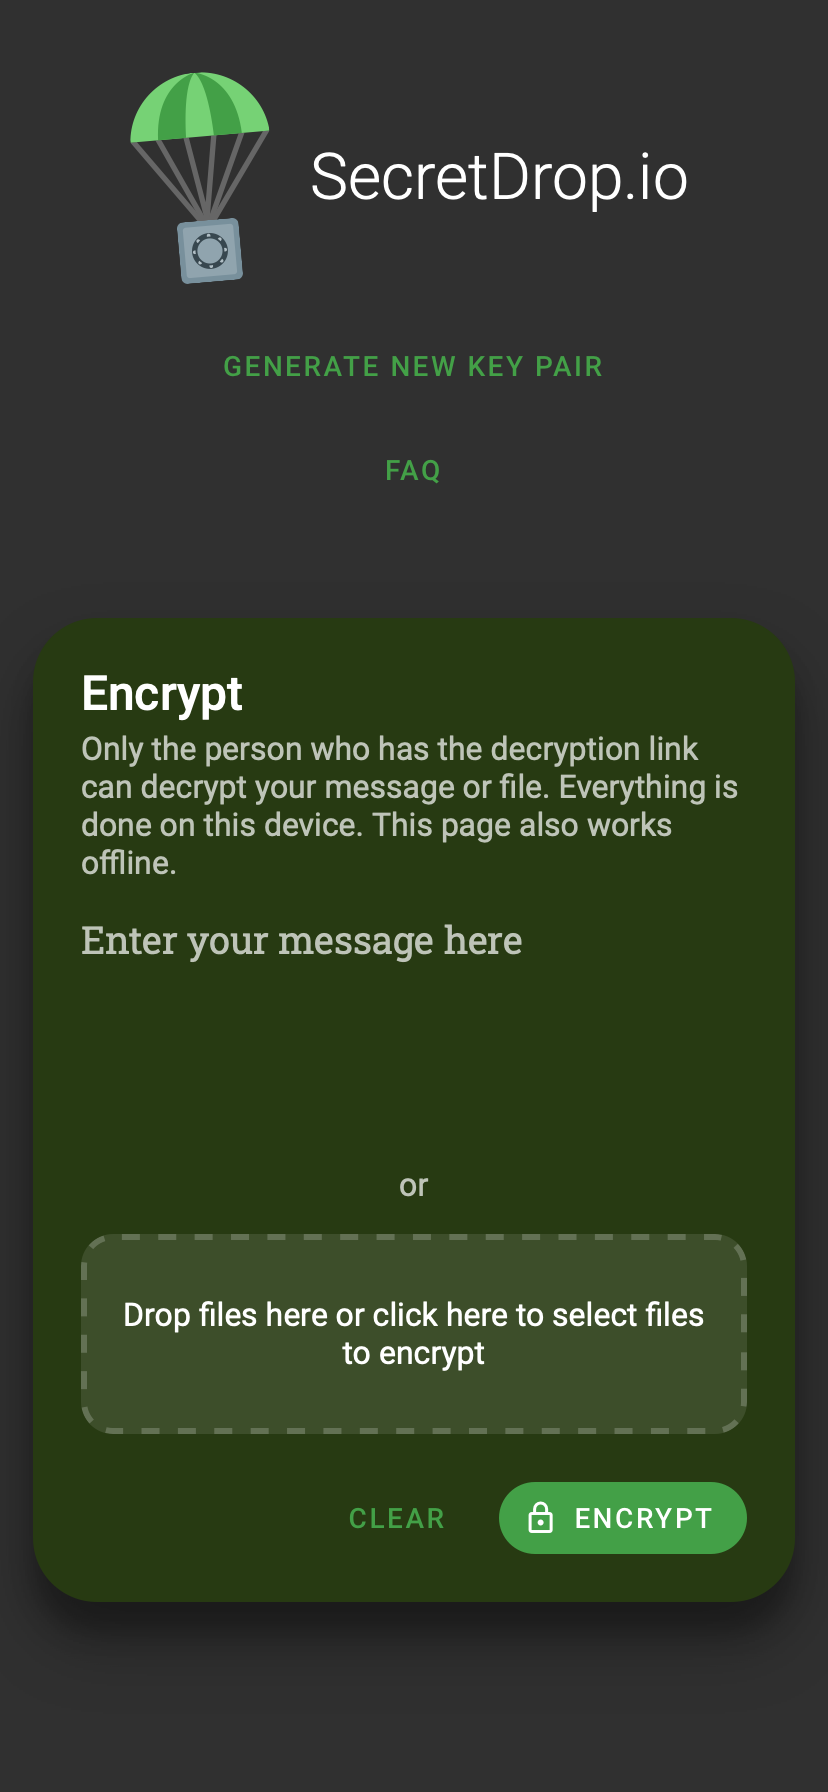 main-test-ts-encrypt-decrypt-encrypt-page-file-encryption-screenshot-414-896-0-snap.png